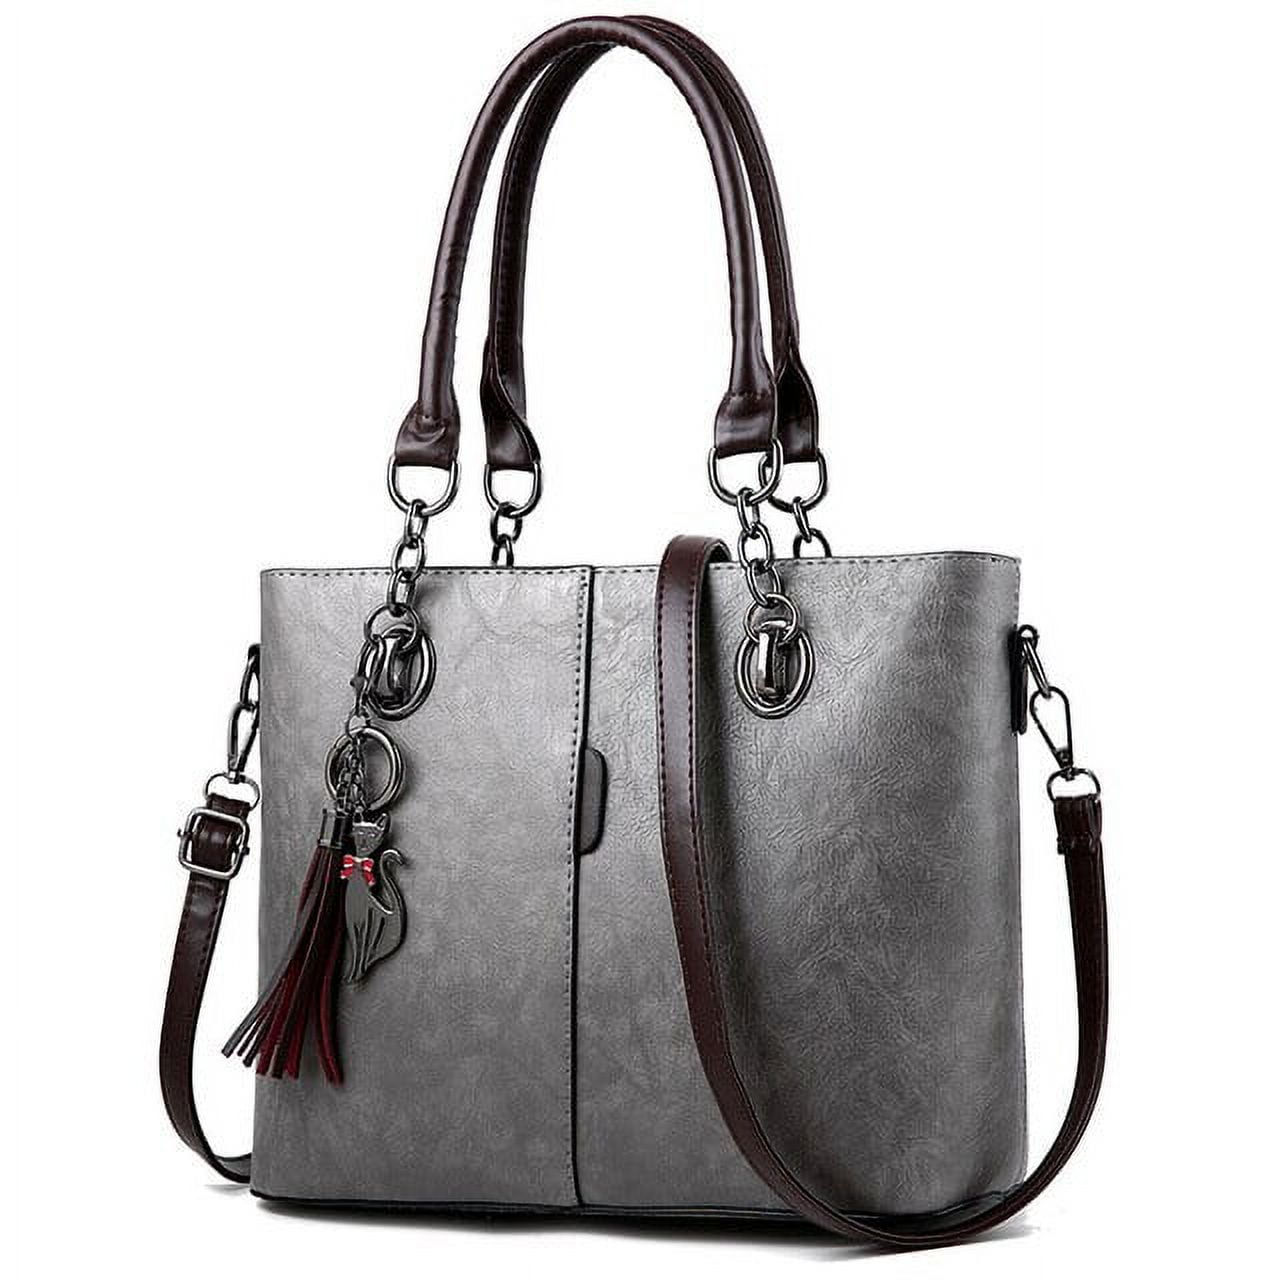 Designer Handbags PARDA Women Fashion Totes Genuine Leather Purse Bag  Luxury Handbag High Quality Purse Bags From C15080193549, $134.05